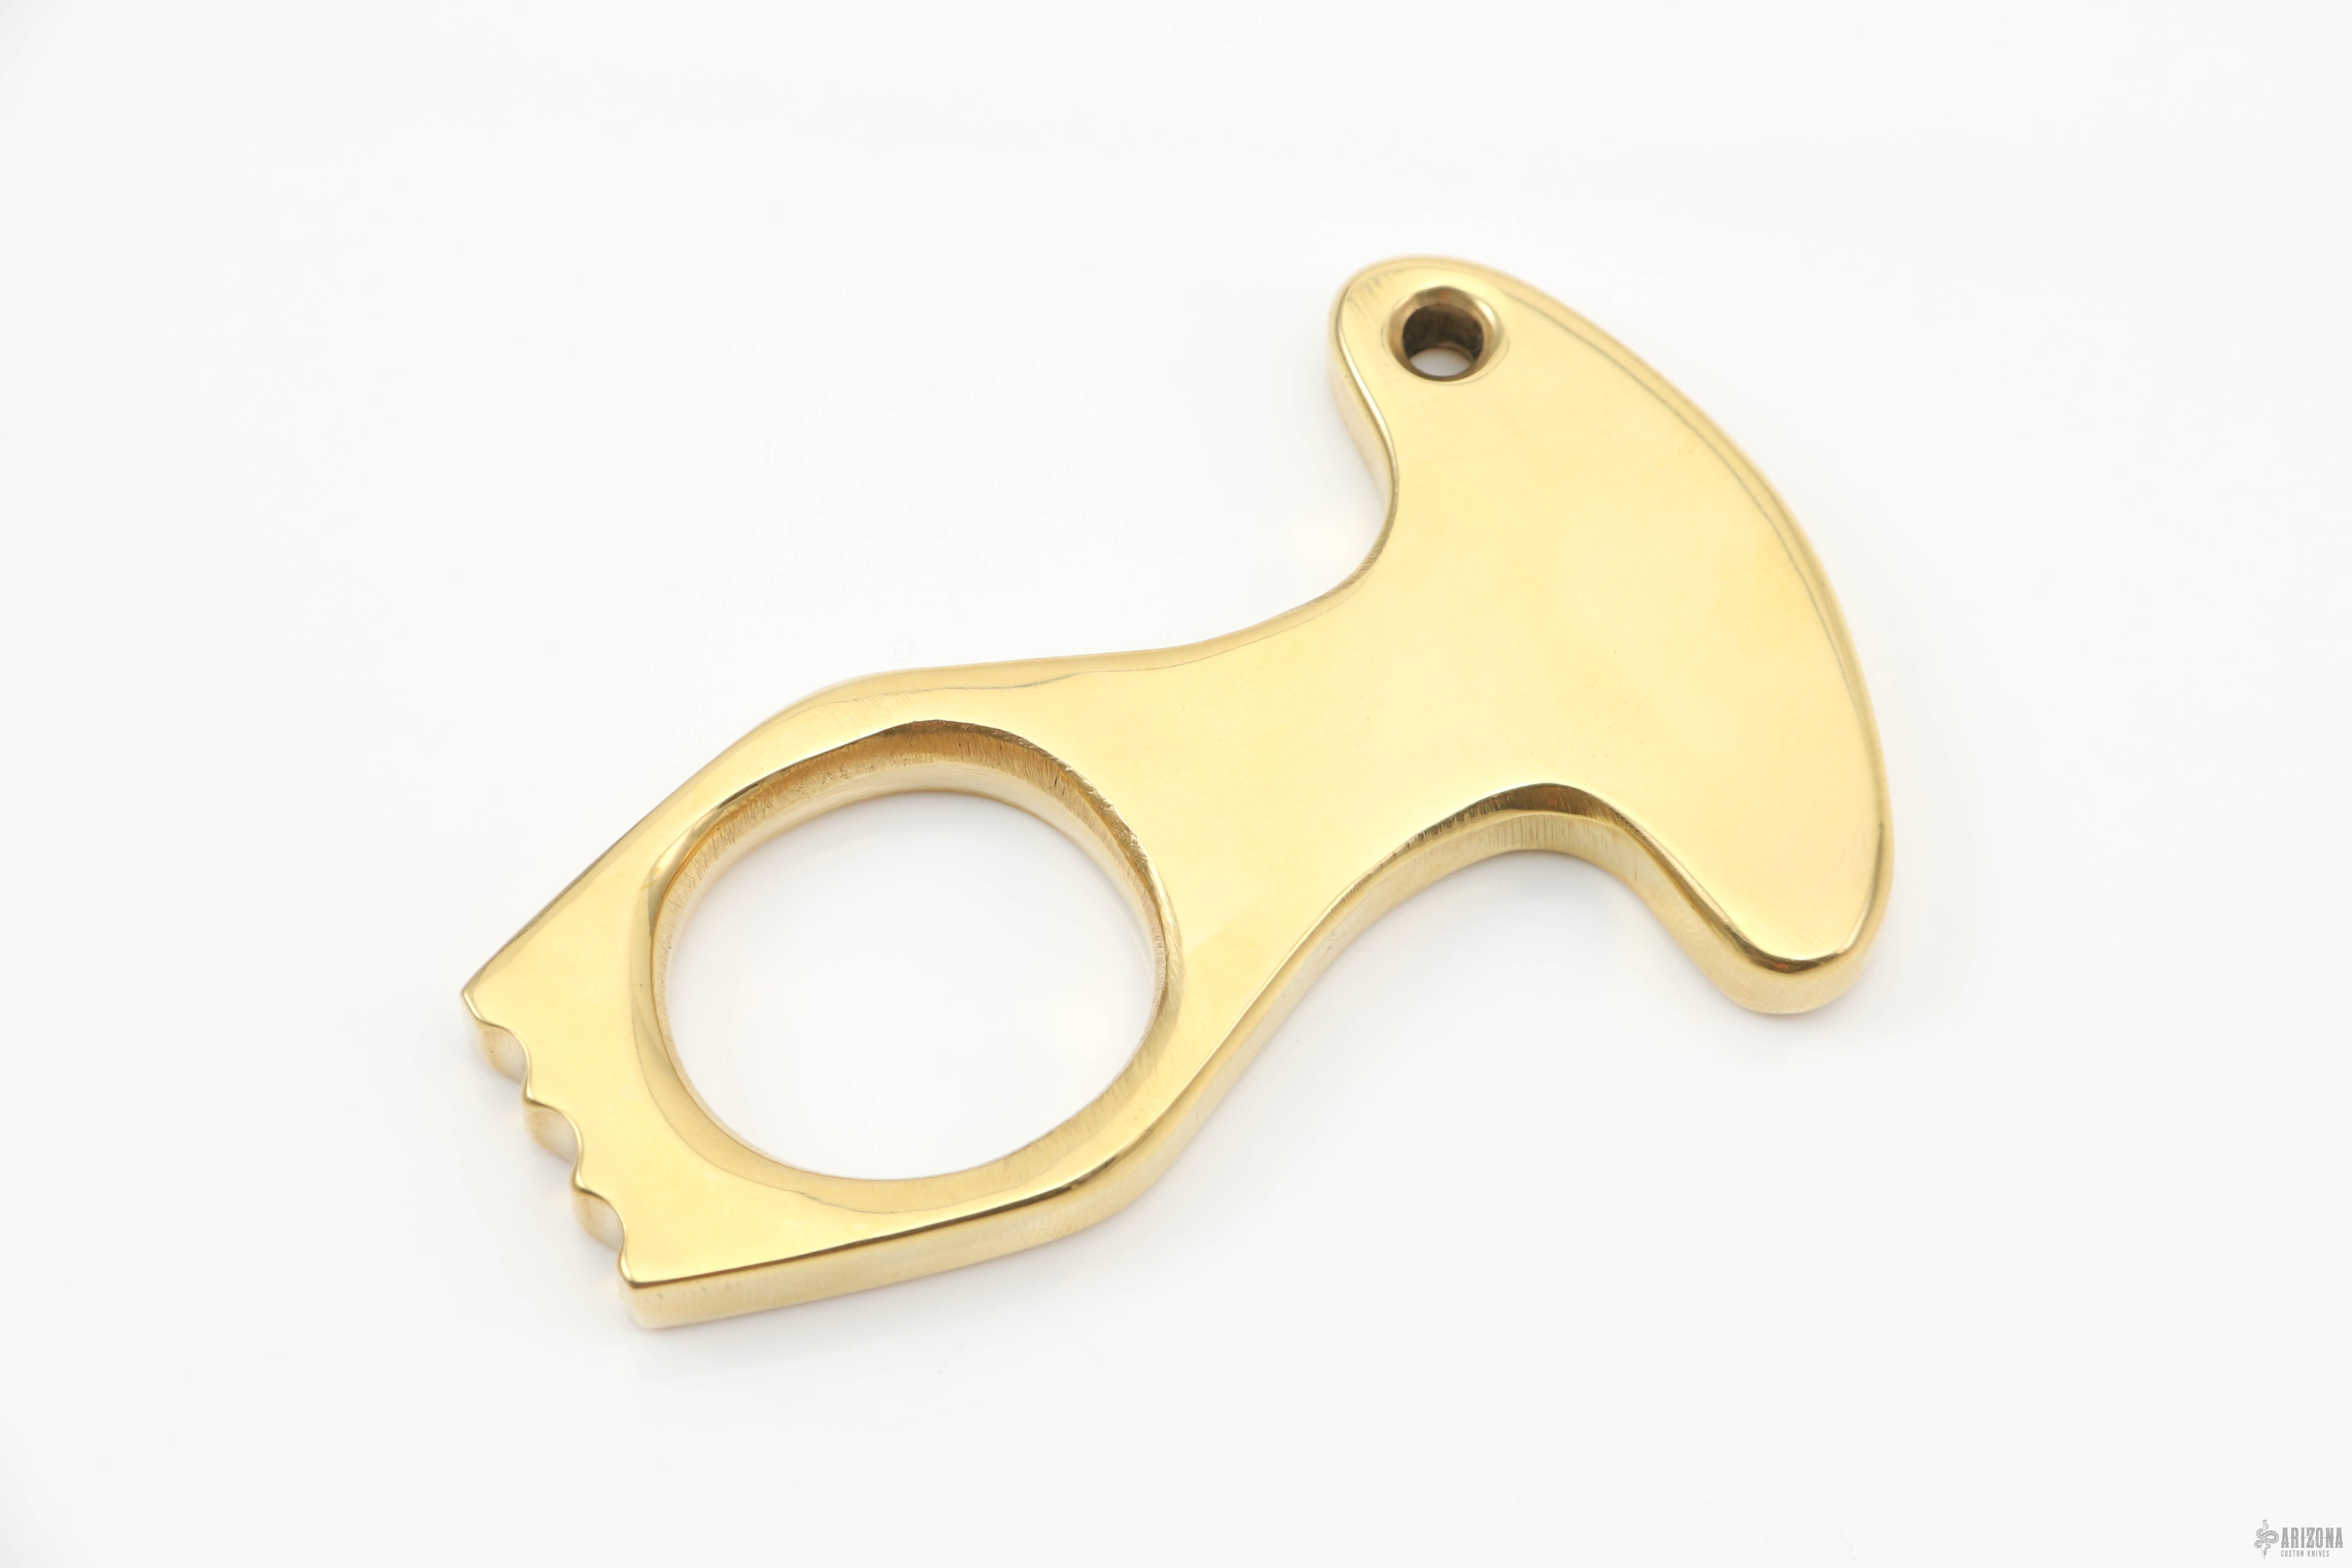 Brass Knuckle - Arizona Custom Knives